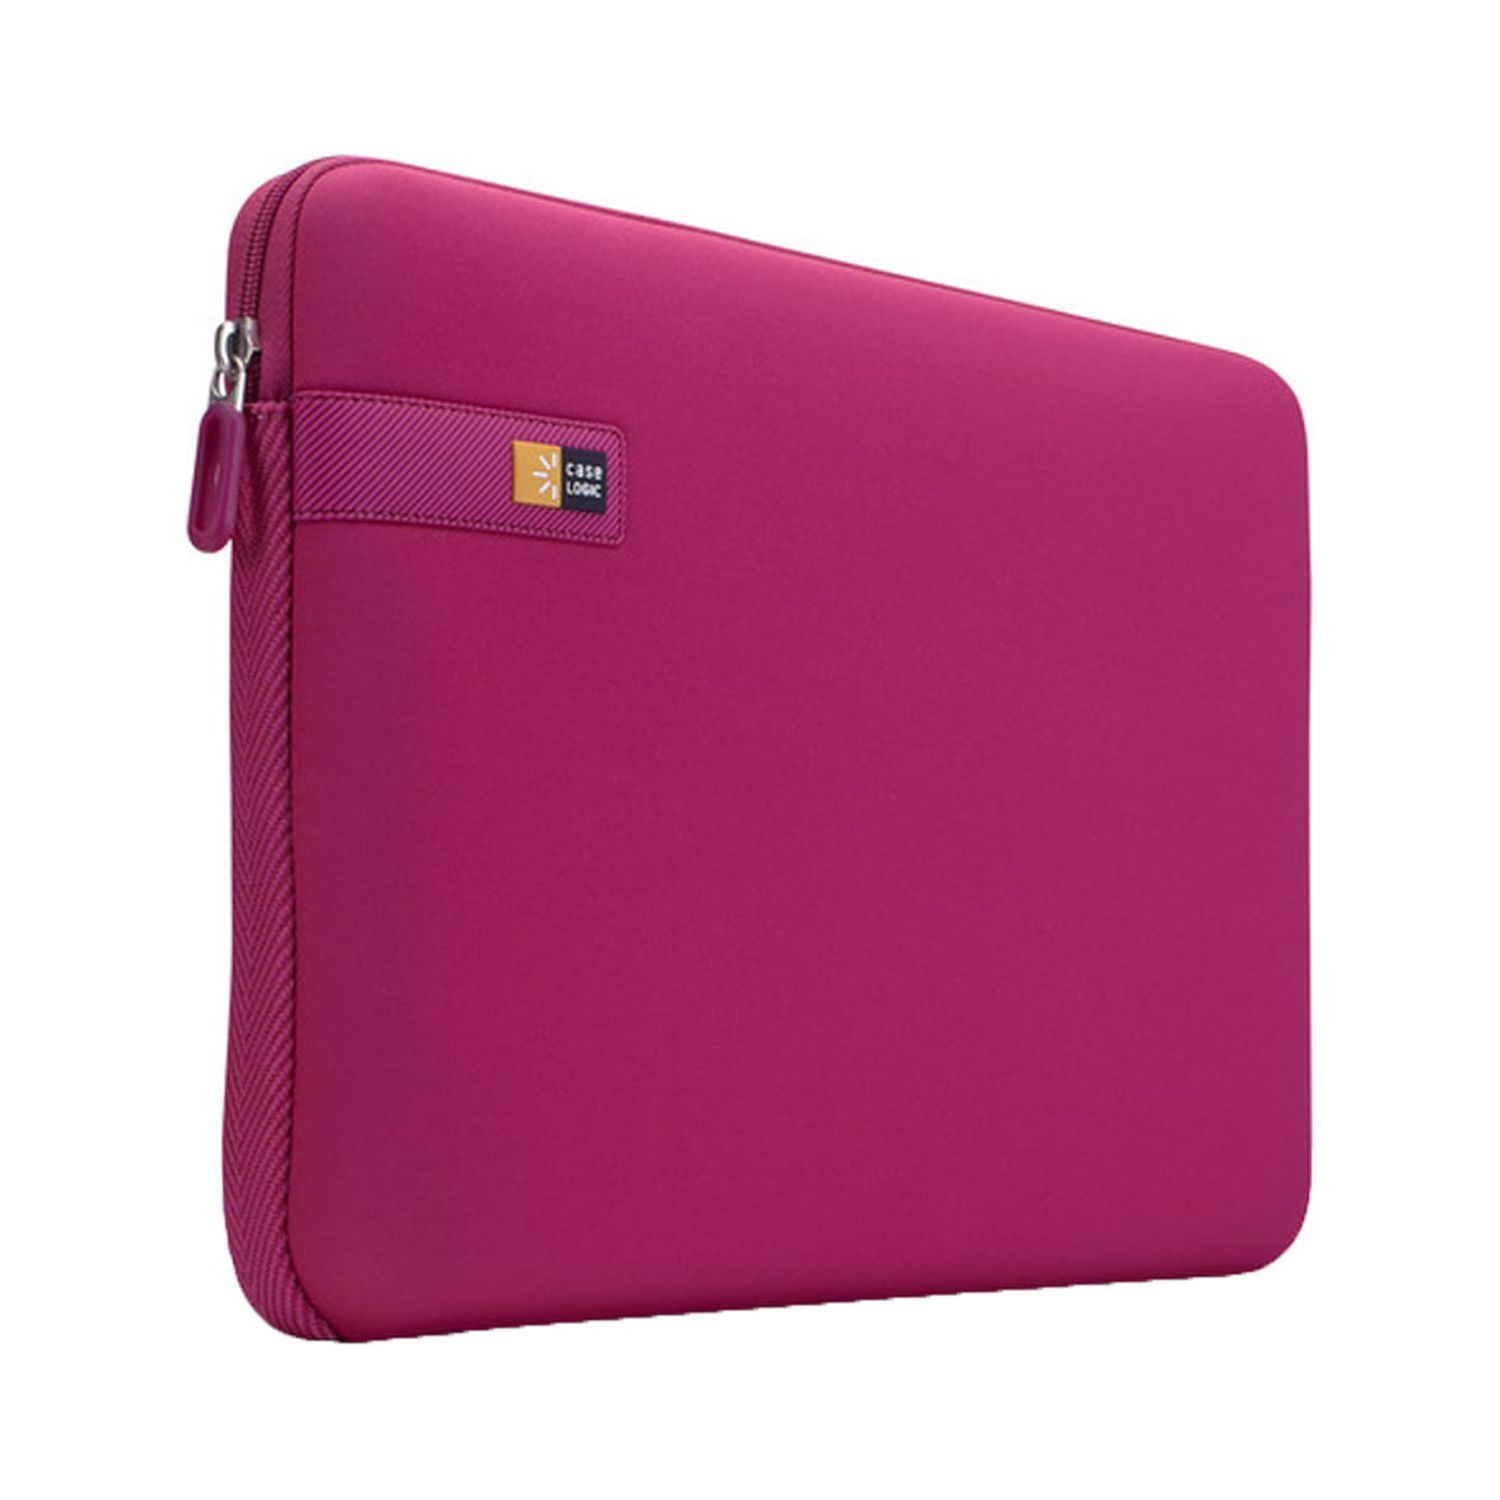 Case Logic 16" Laptop Sleeve, Pink - image 1 of 3